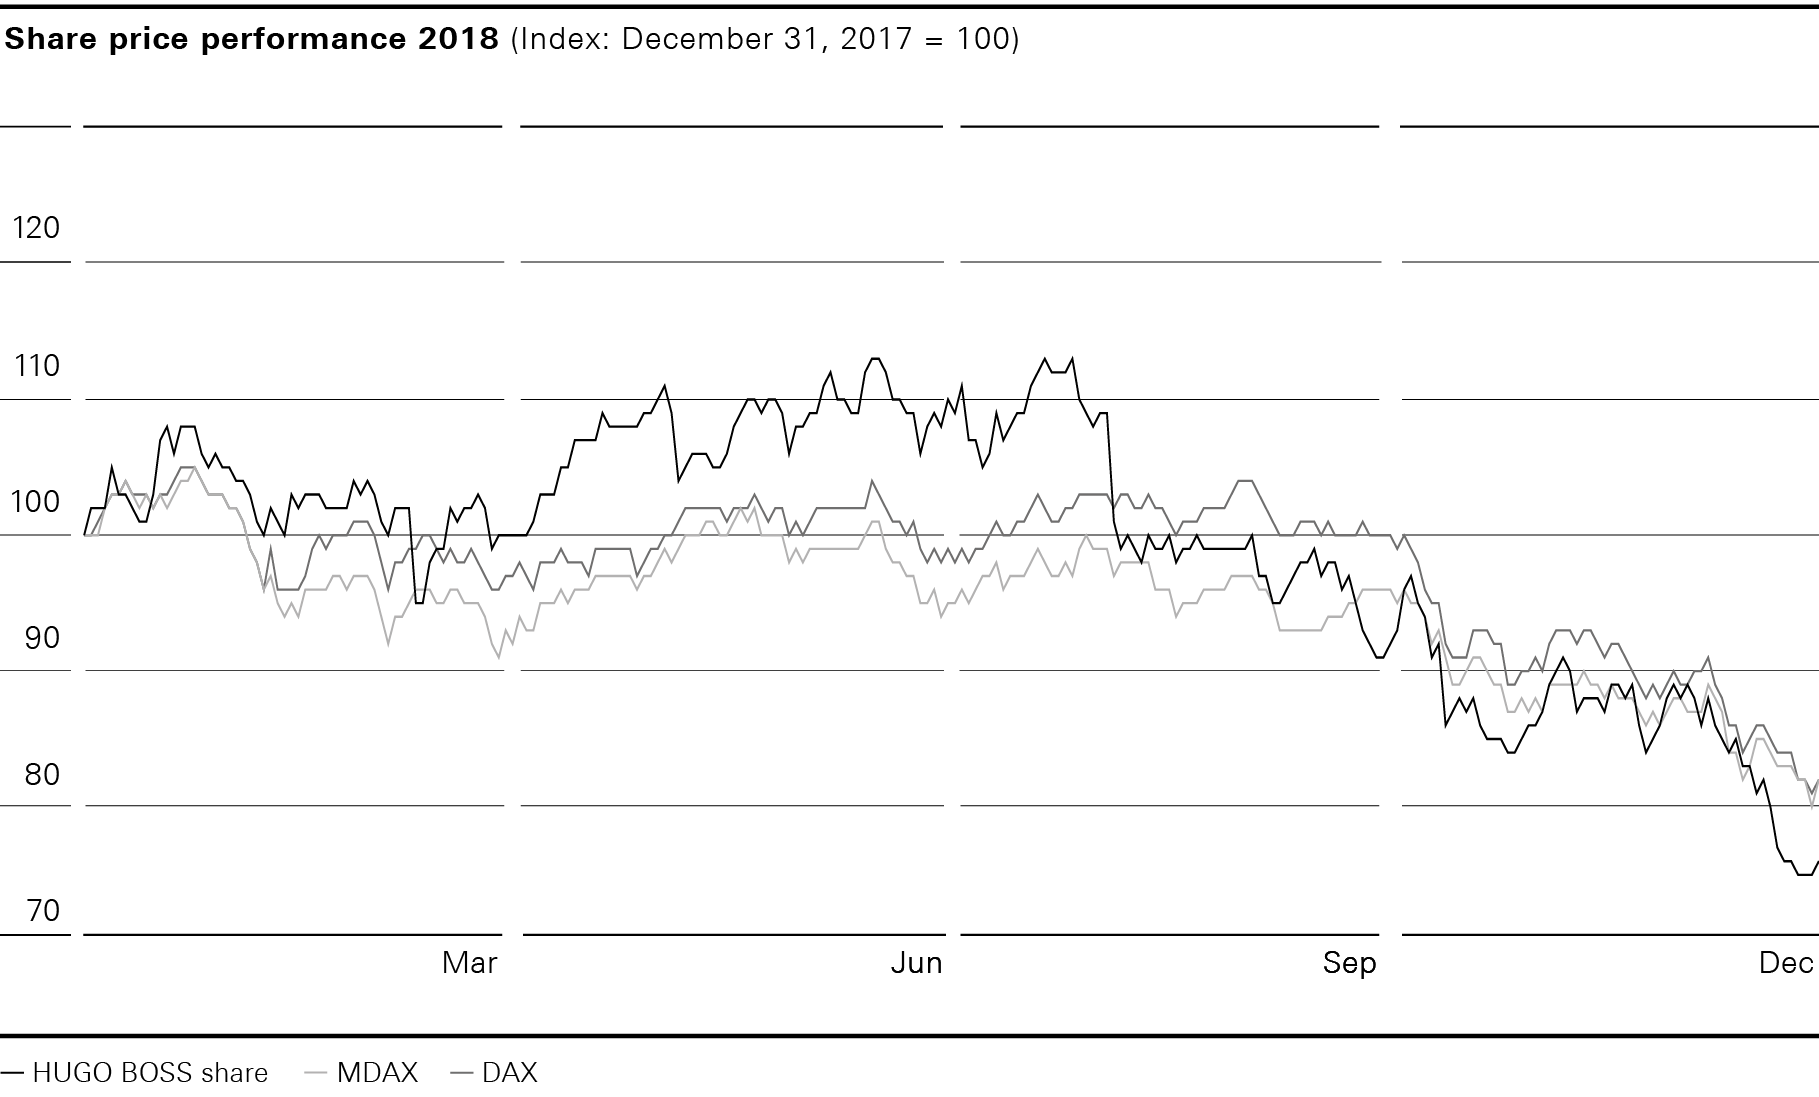 Share price performance 2018 (line chart)